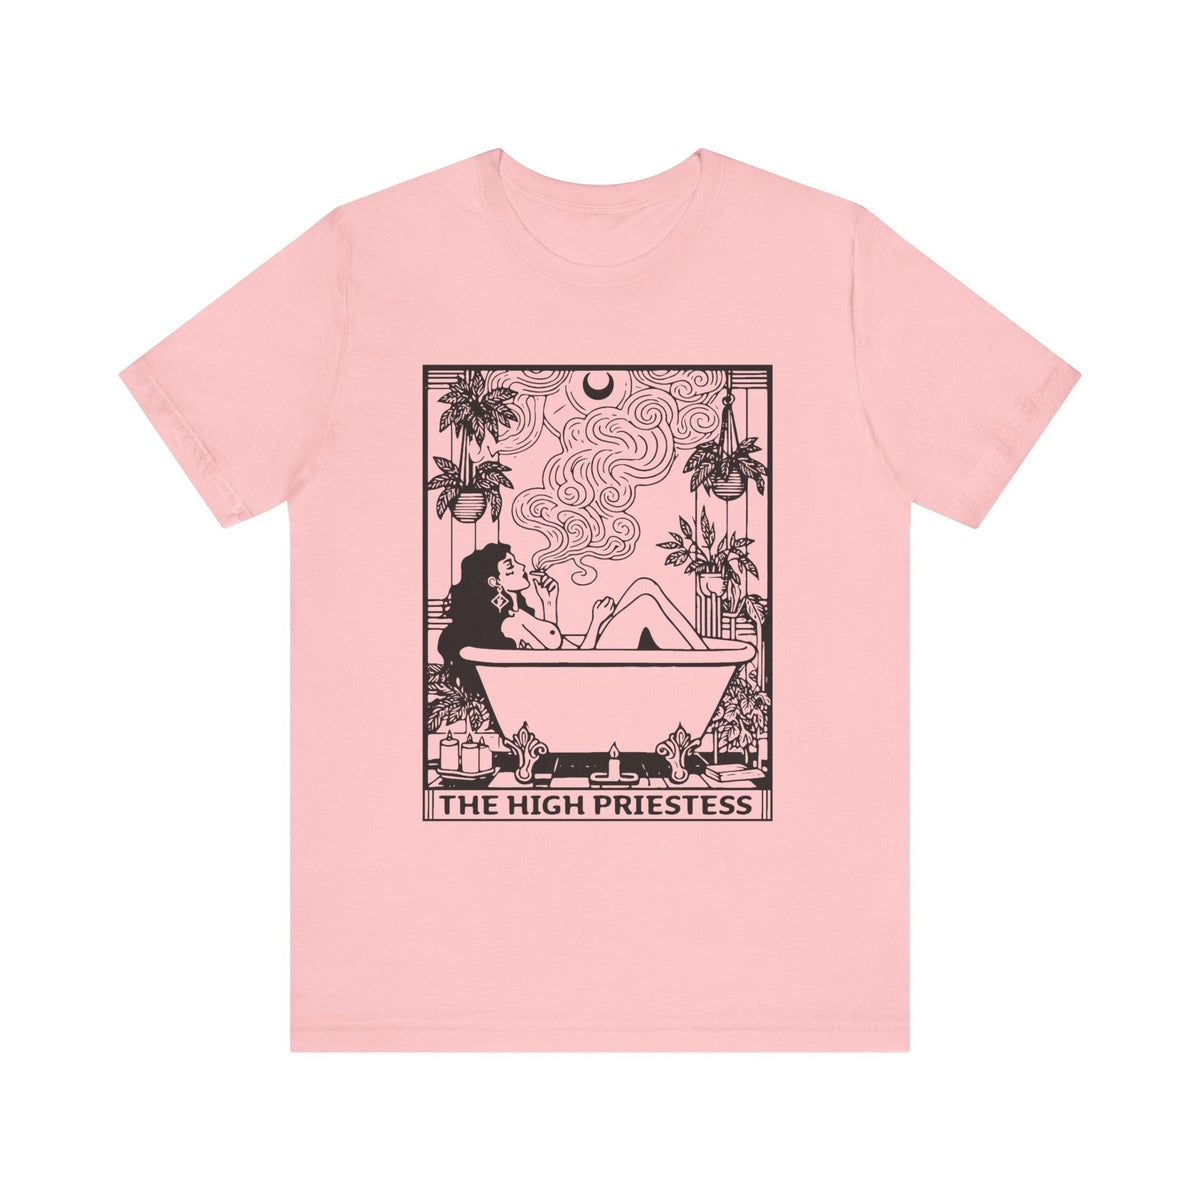 High Priestess Tarot Block Print Short Sleeve Tee - Goth Cloth Co.T - Shirt28879086425019347507